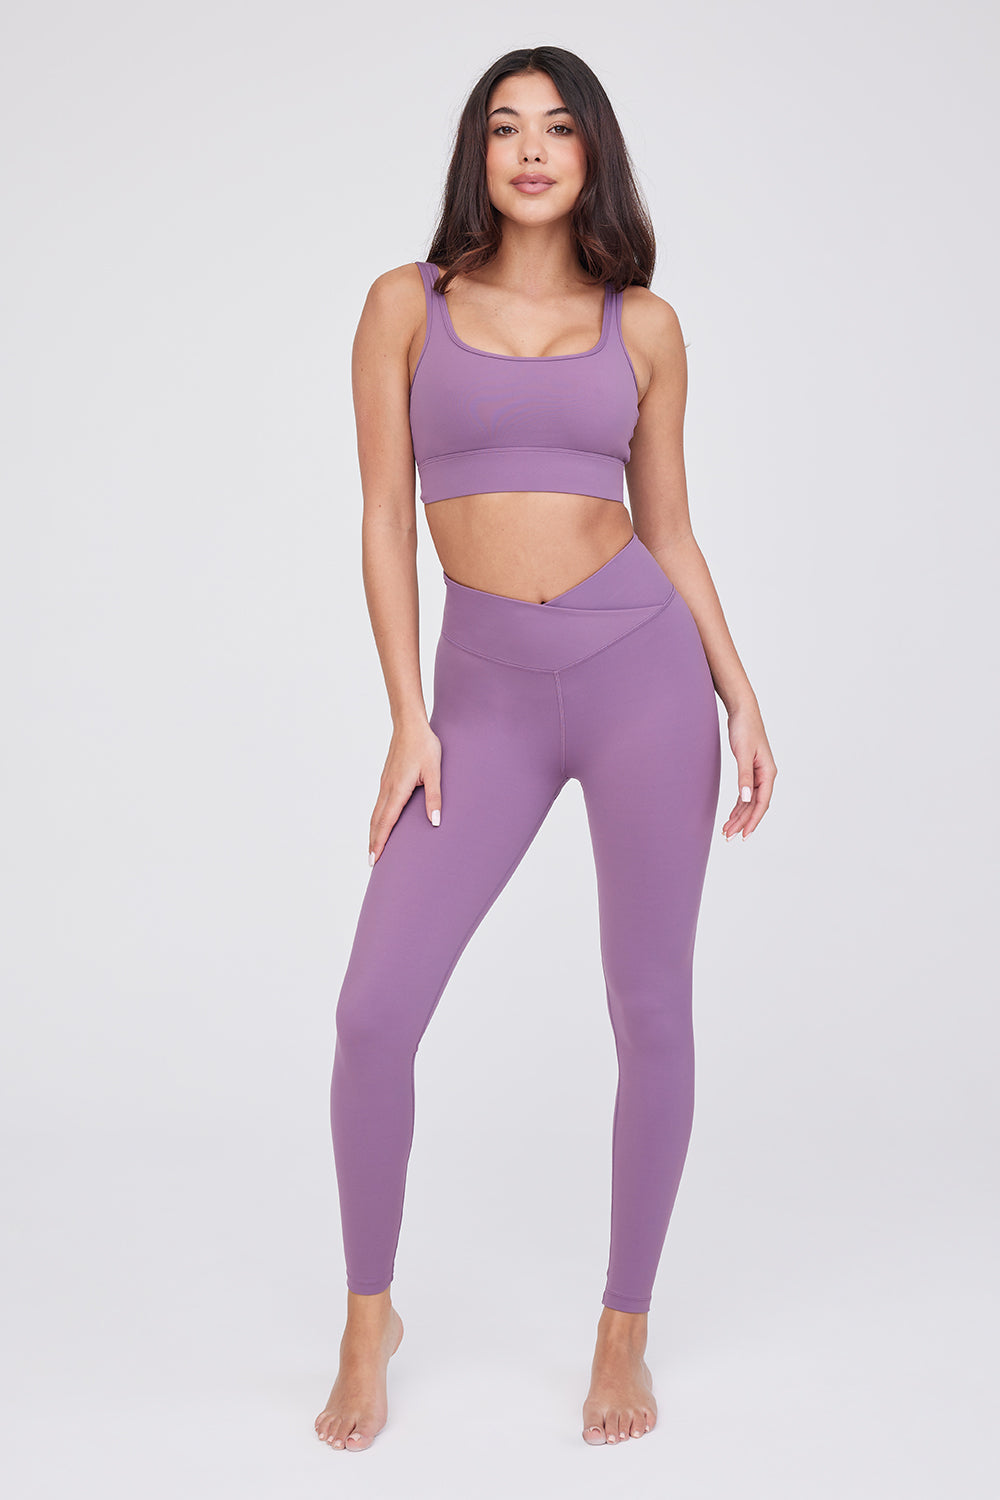 Dot Contour leggings in Purple